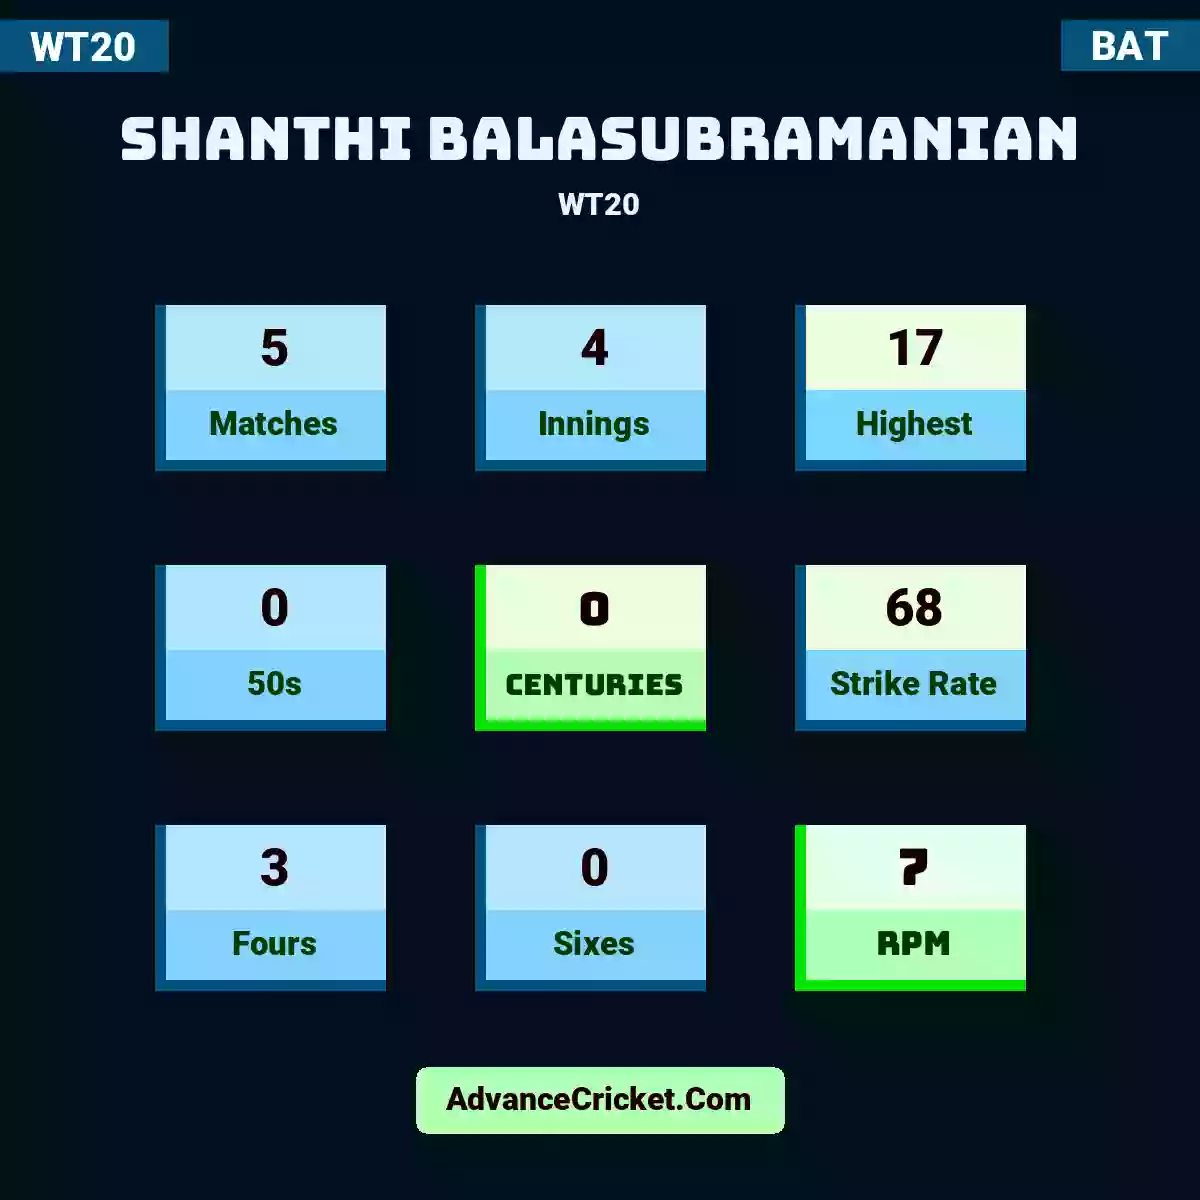 Shanthi Balasubramanian WT20 , Shanthi Balasubramanian played 5 matches, scored 17 runs as highest, 0 half-centuries, and 0 centuries, with a strike rate of 68. S.Balasubramanian hit 3 fours and 0 sixes, with an RPM of 7.